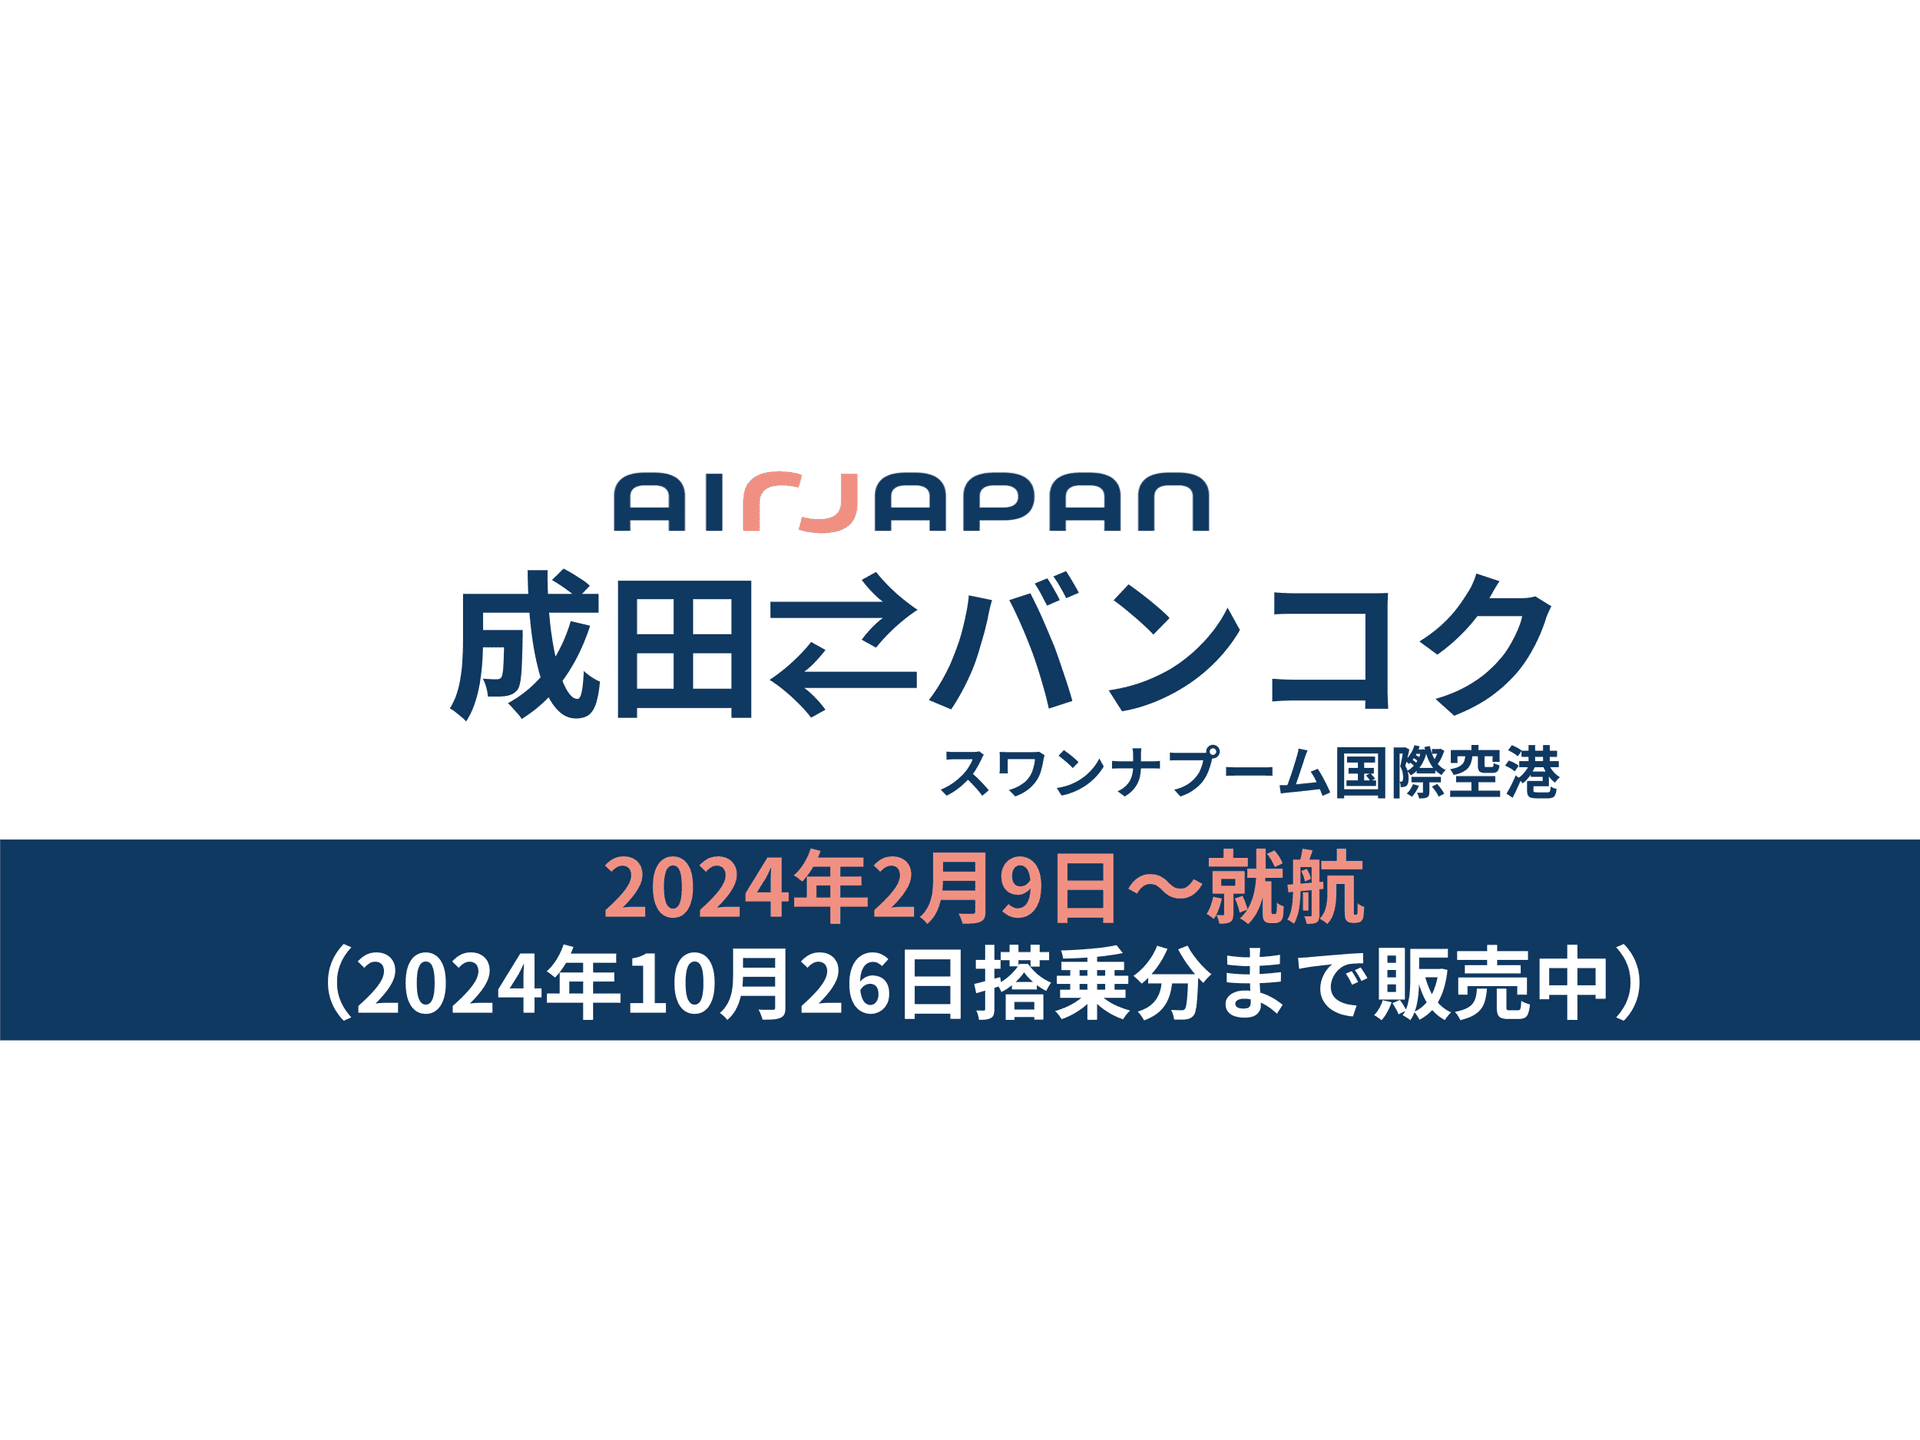 Airjapanは2024年2月9日に成田、バンコク間の直行便を就航します。